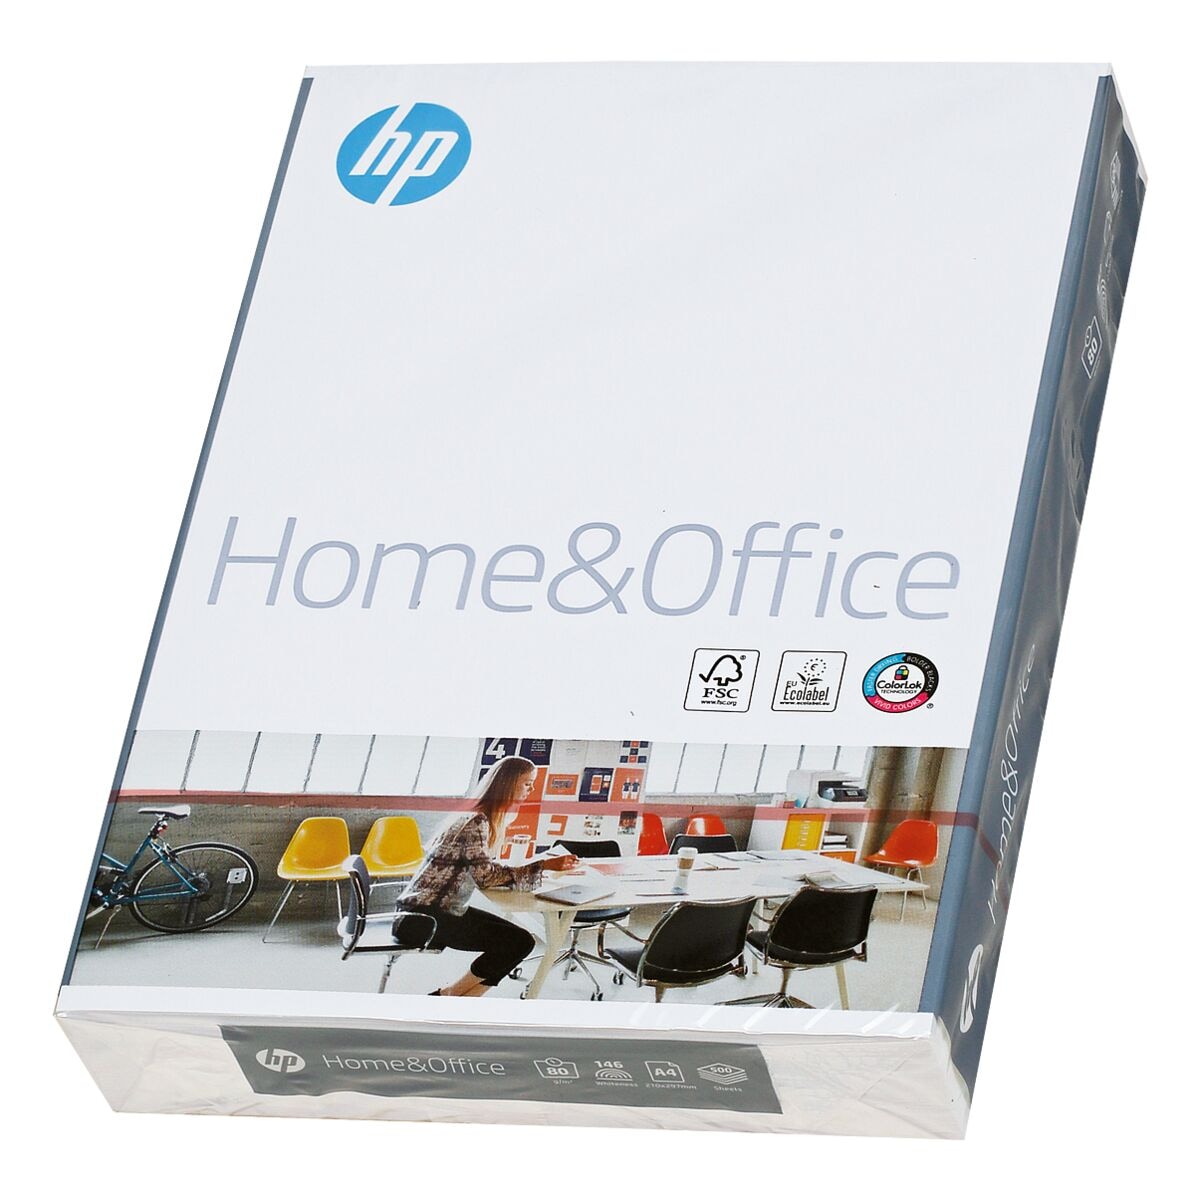 Multifunktionales Druckerpapier A4 HP Home & Office - 500 Blatt gesamt, 80g/qm